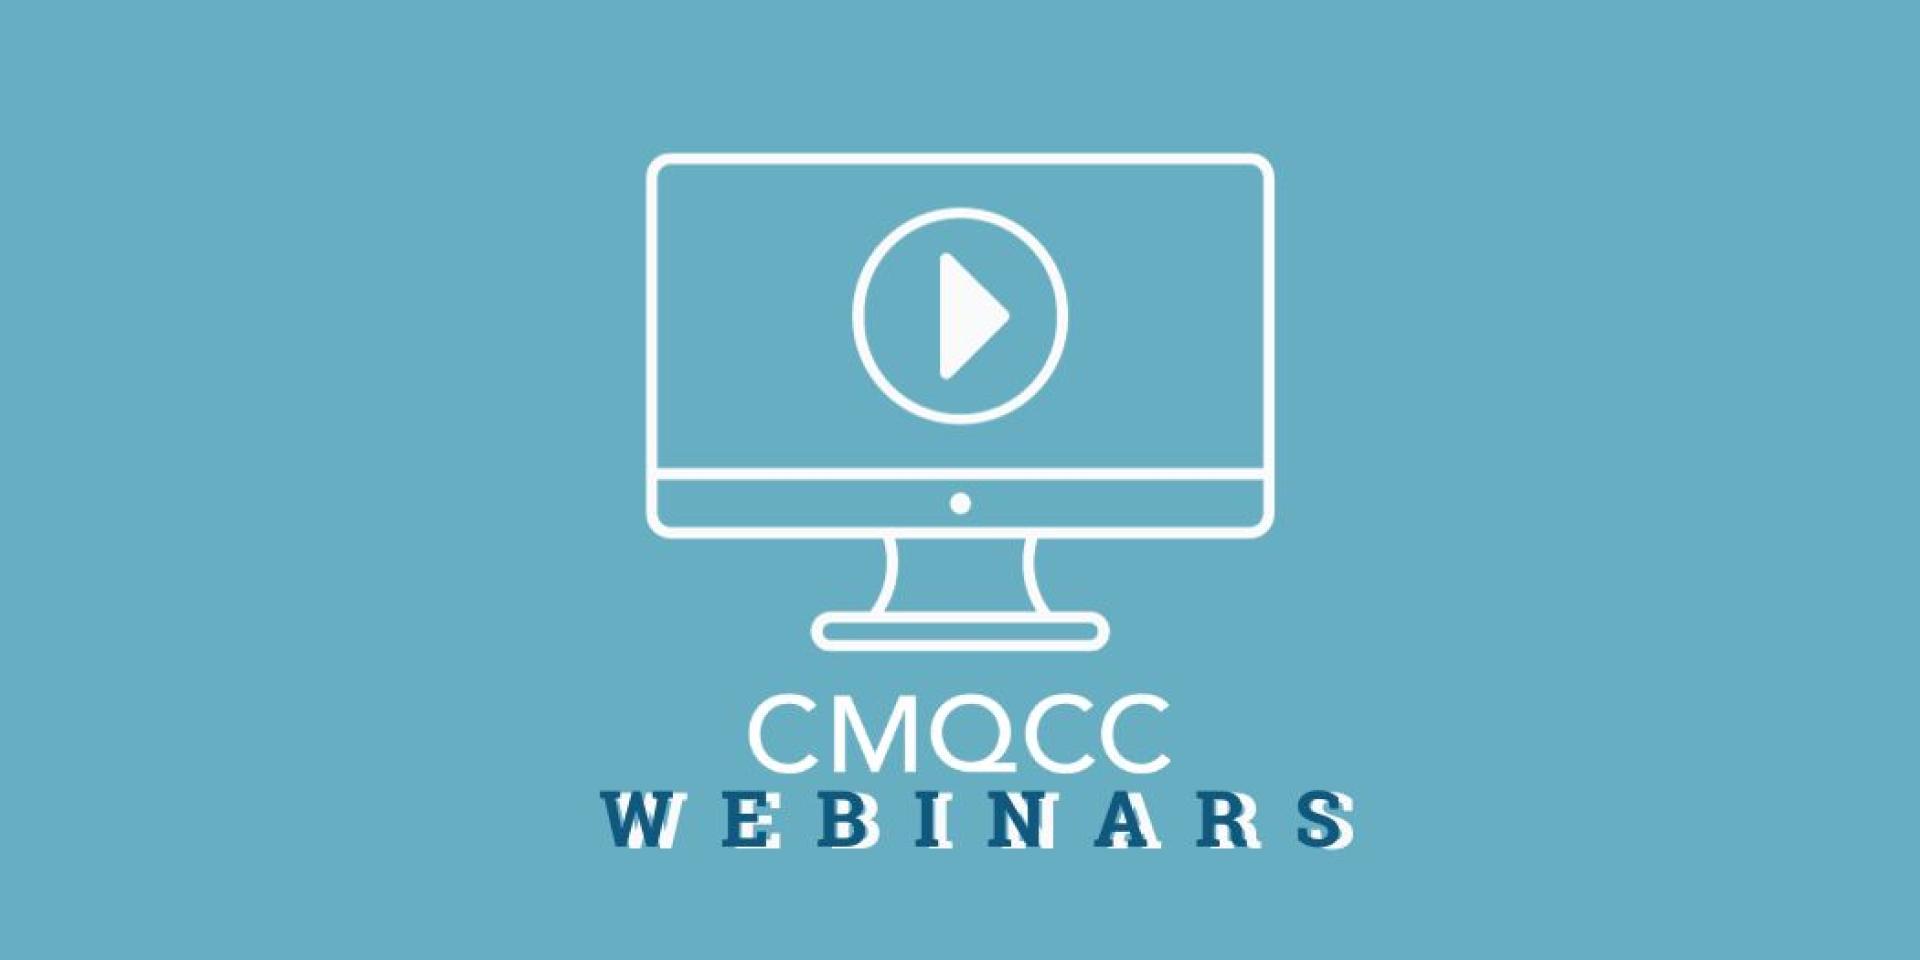 CMQCC Webinars graphic